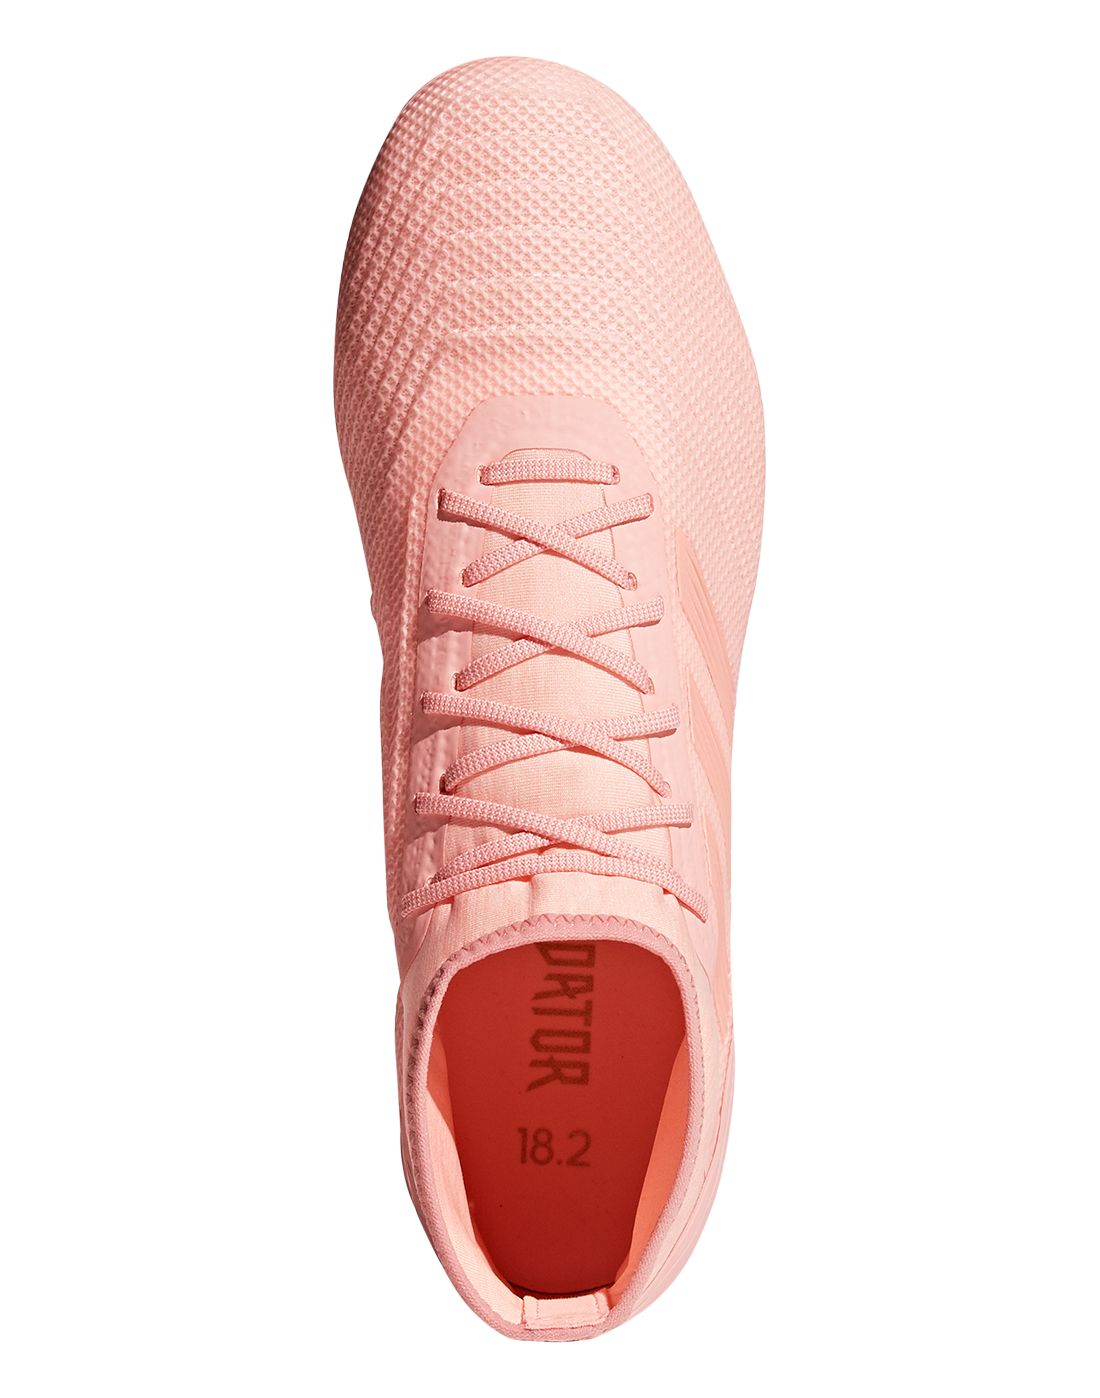 adidas predator 18.2 pink